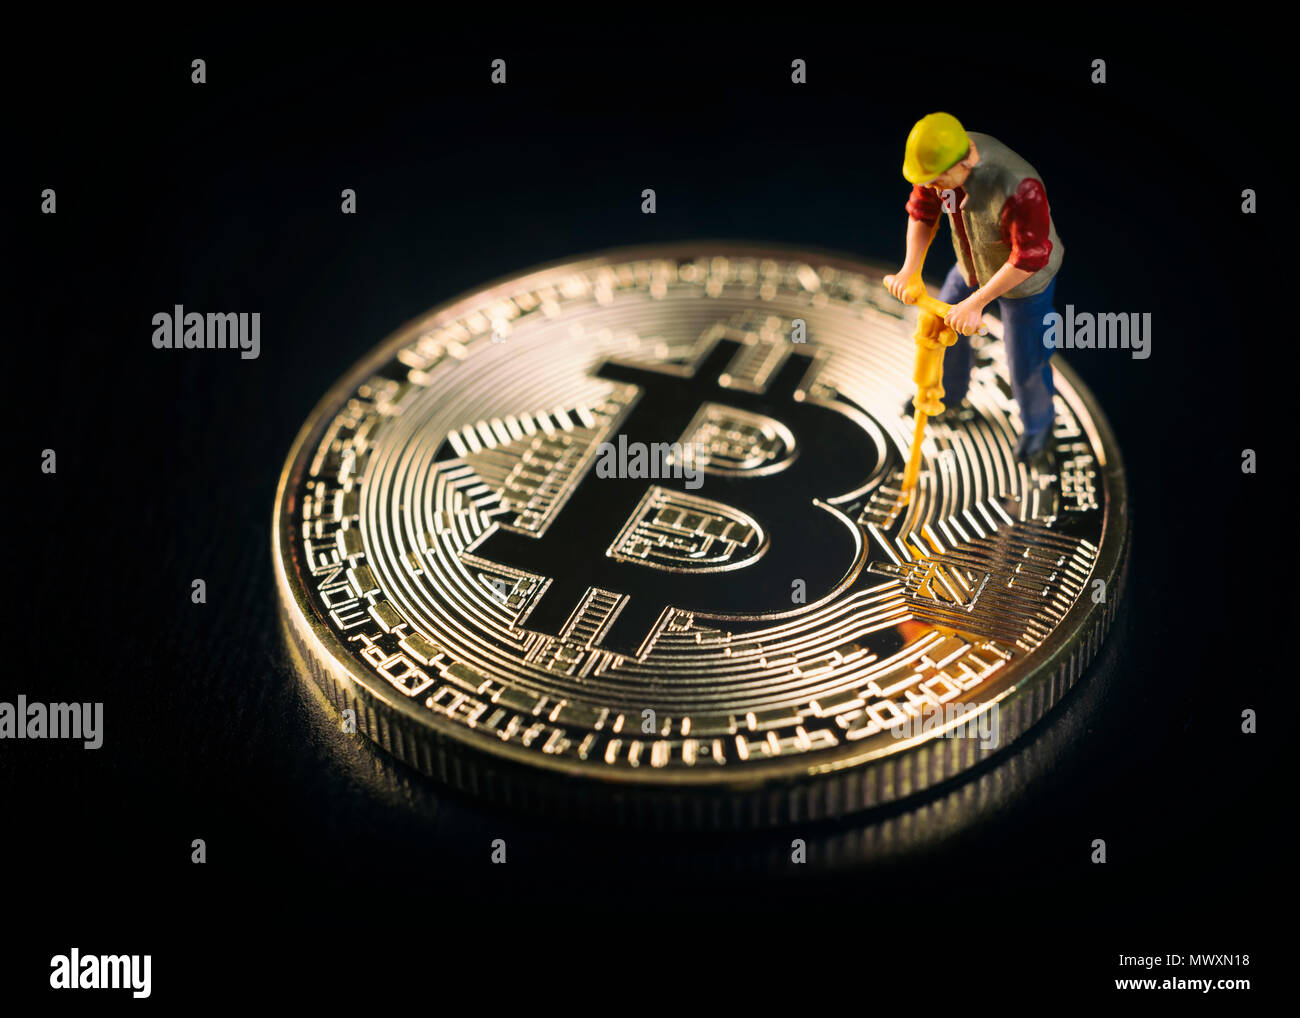 Miniature Worker Mining Bitcoin On A Black Surface Stock Photo